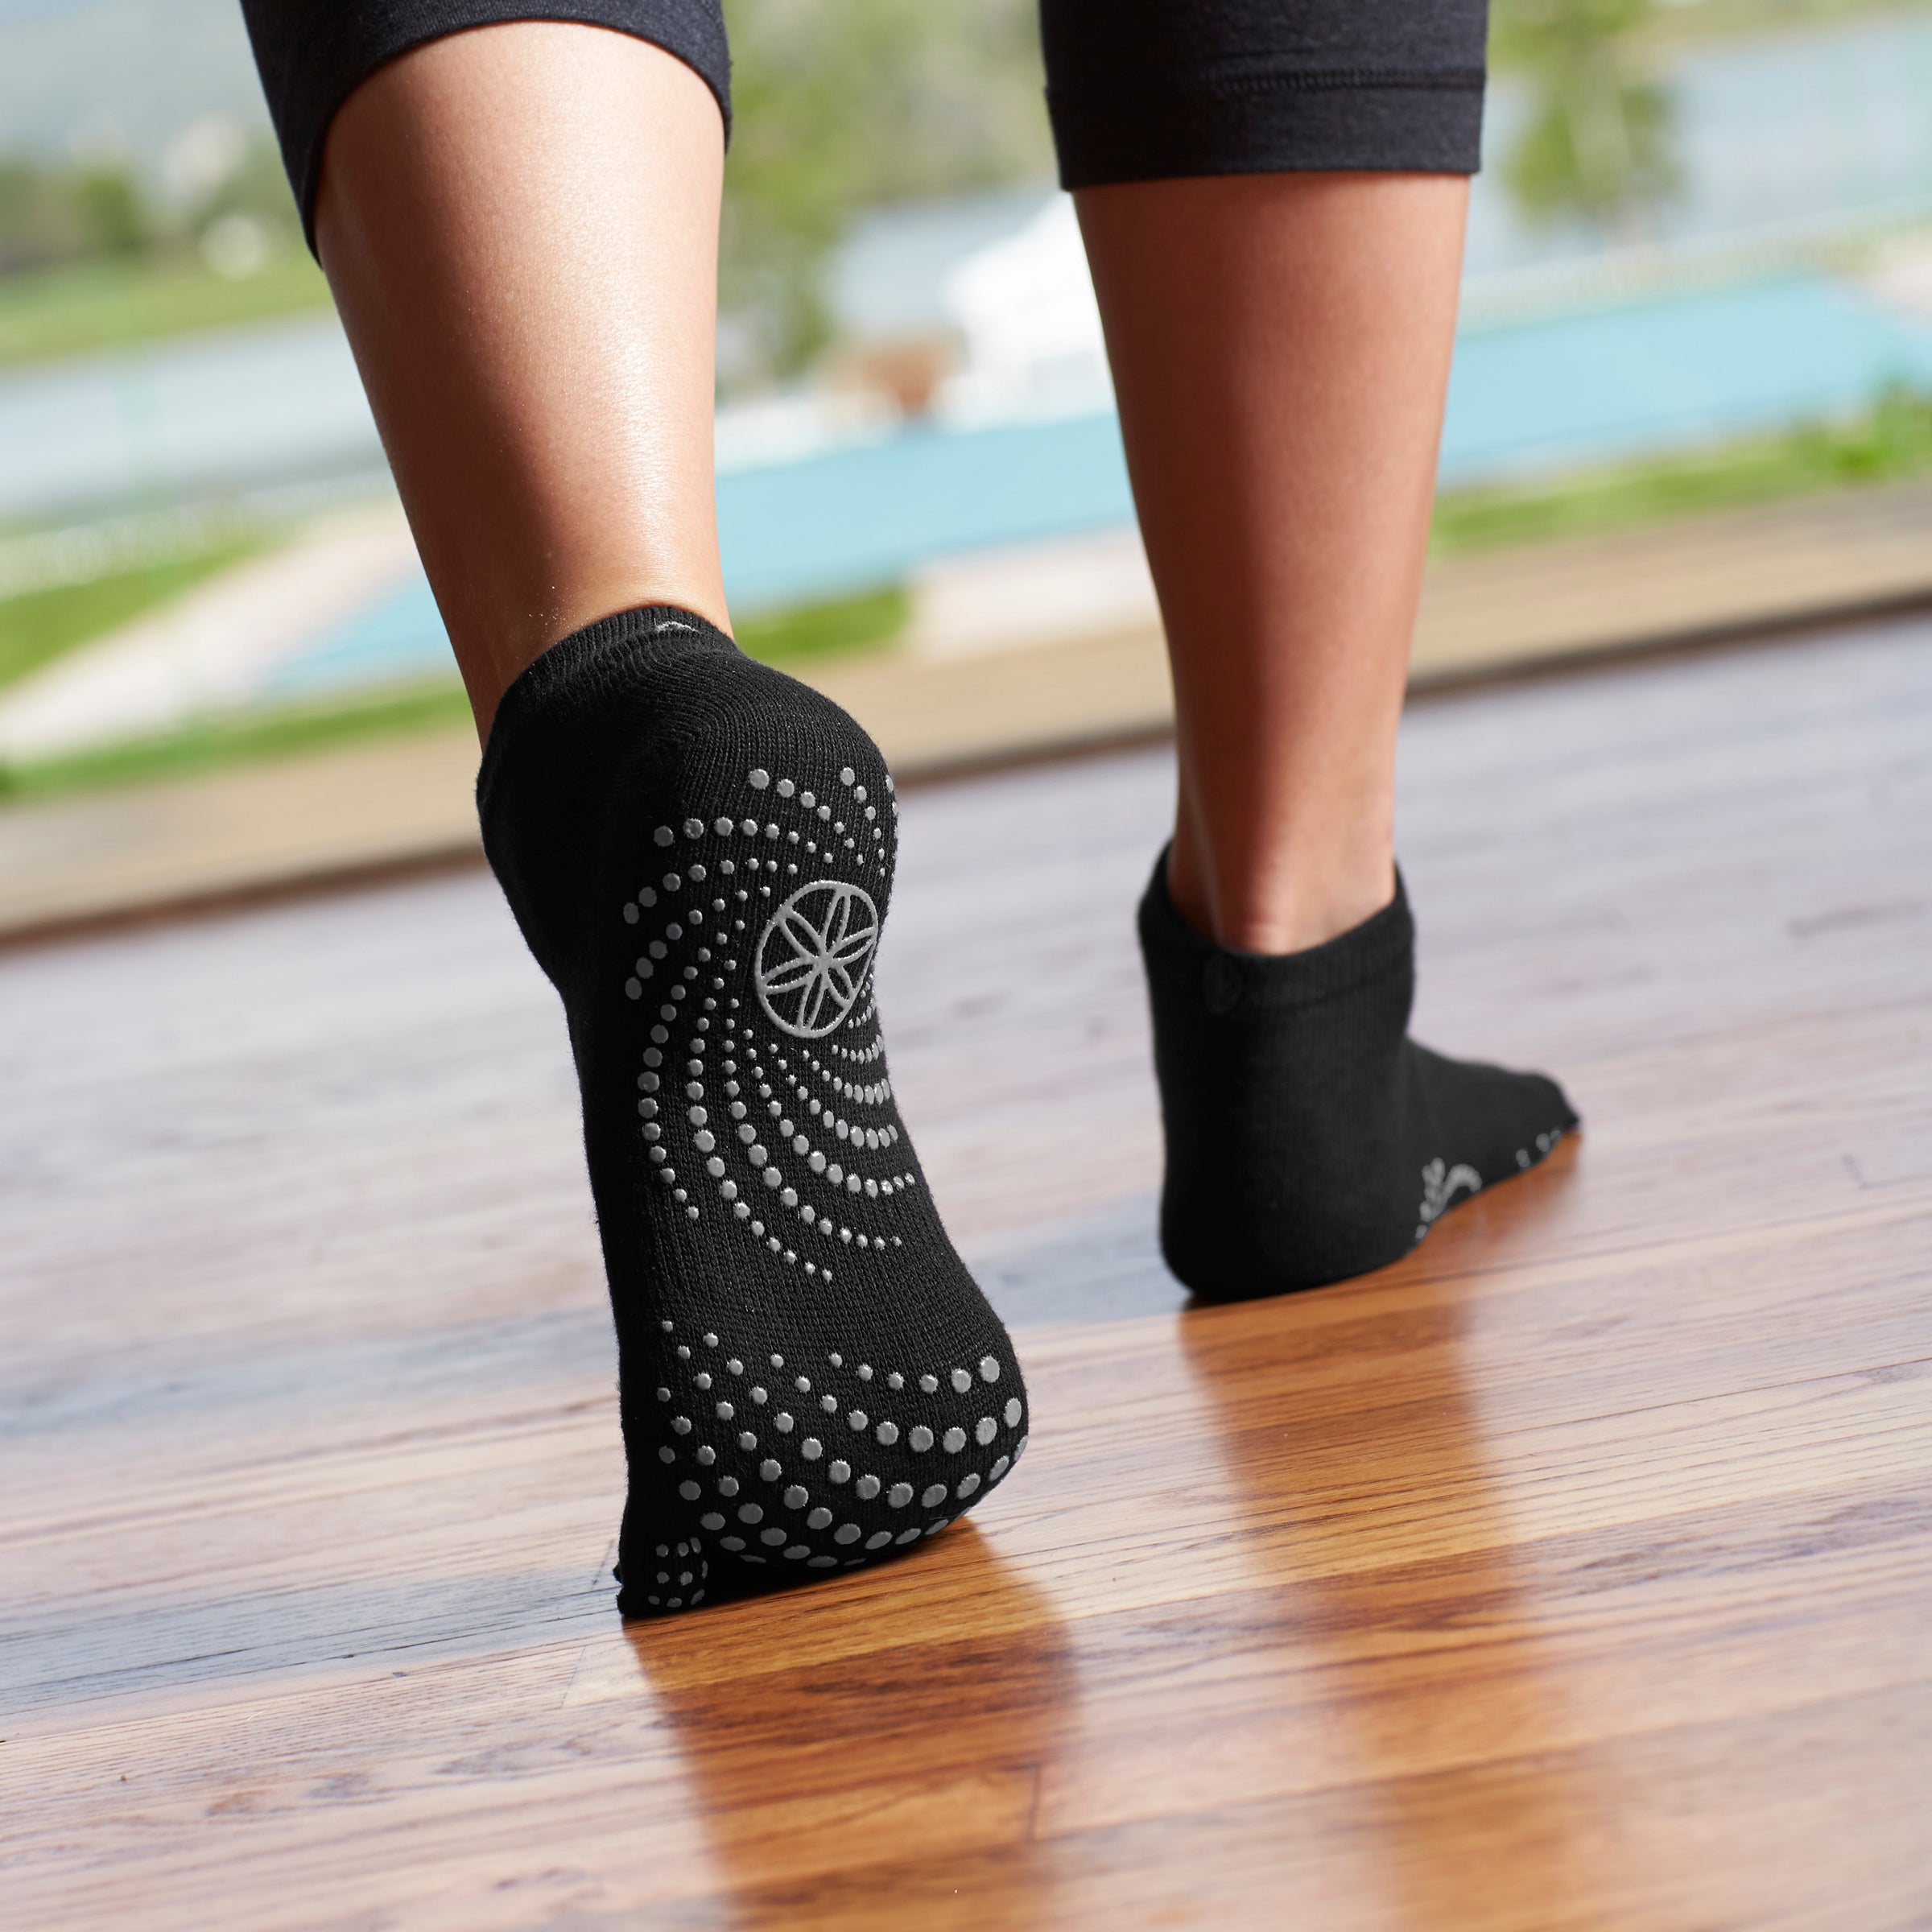 BIOAUM Yoga Socks for Women - 6 Pairs Cotton Cushion Non Slip Grip